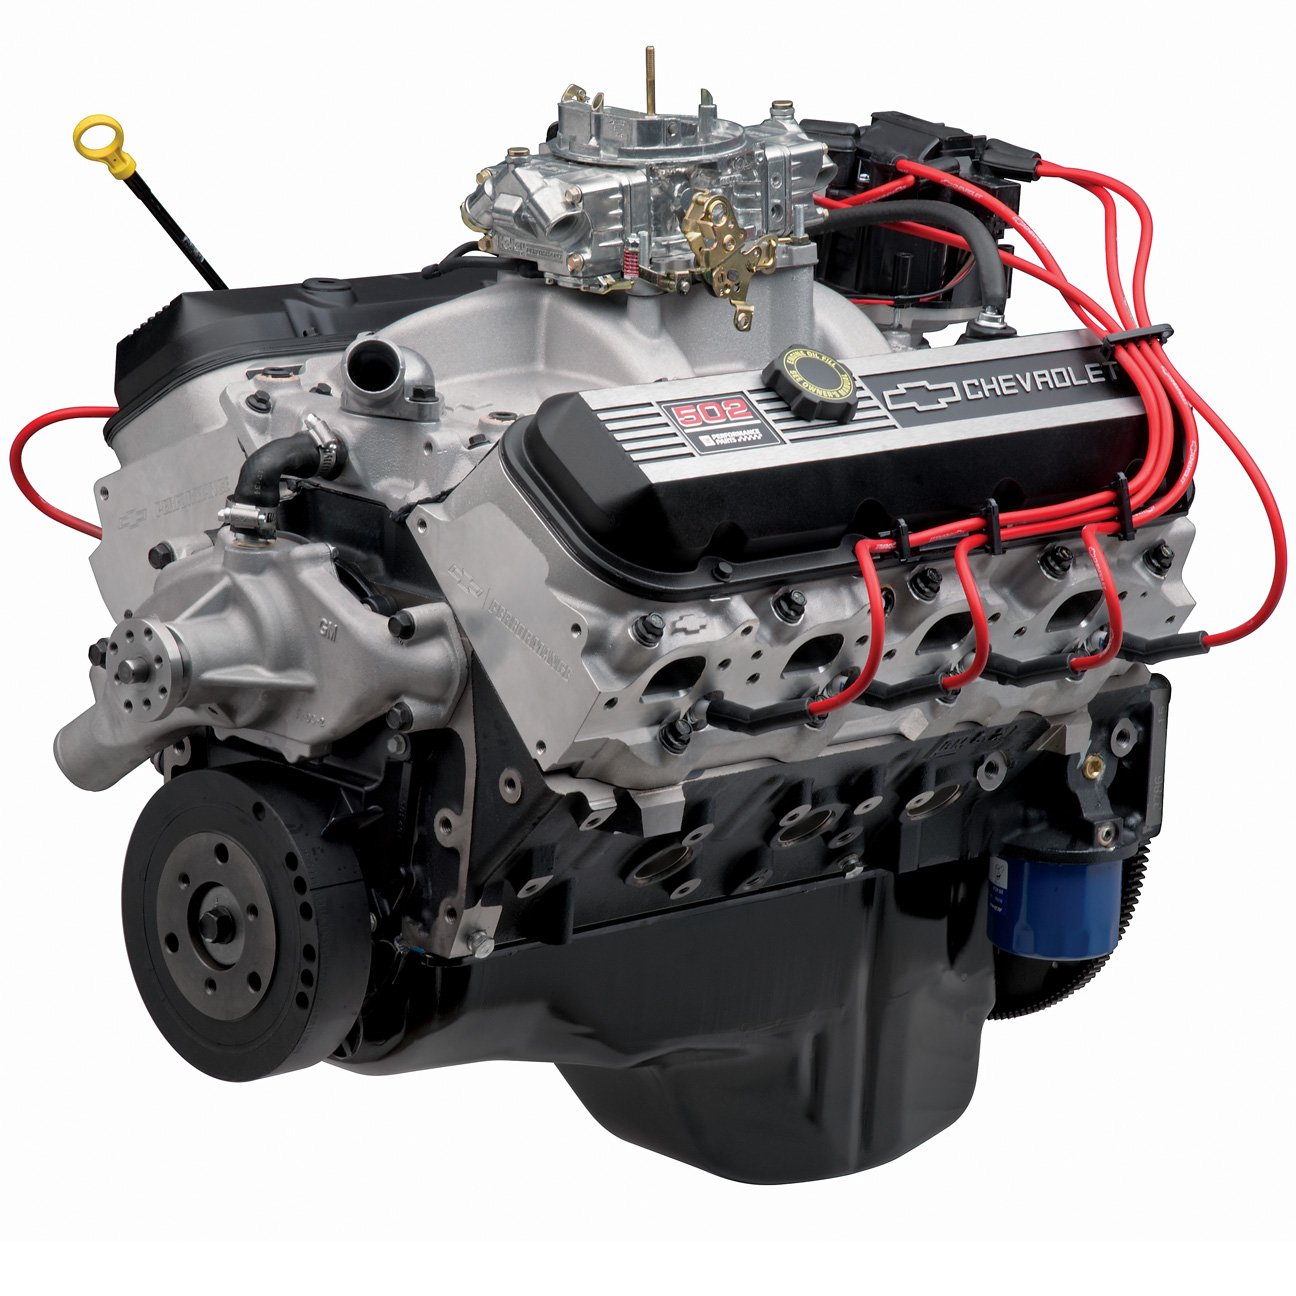 ZZ502/502 Deluxe 502ci Engine 508 HP @ 5,200 RPM